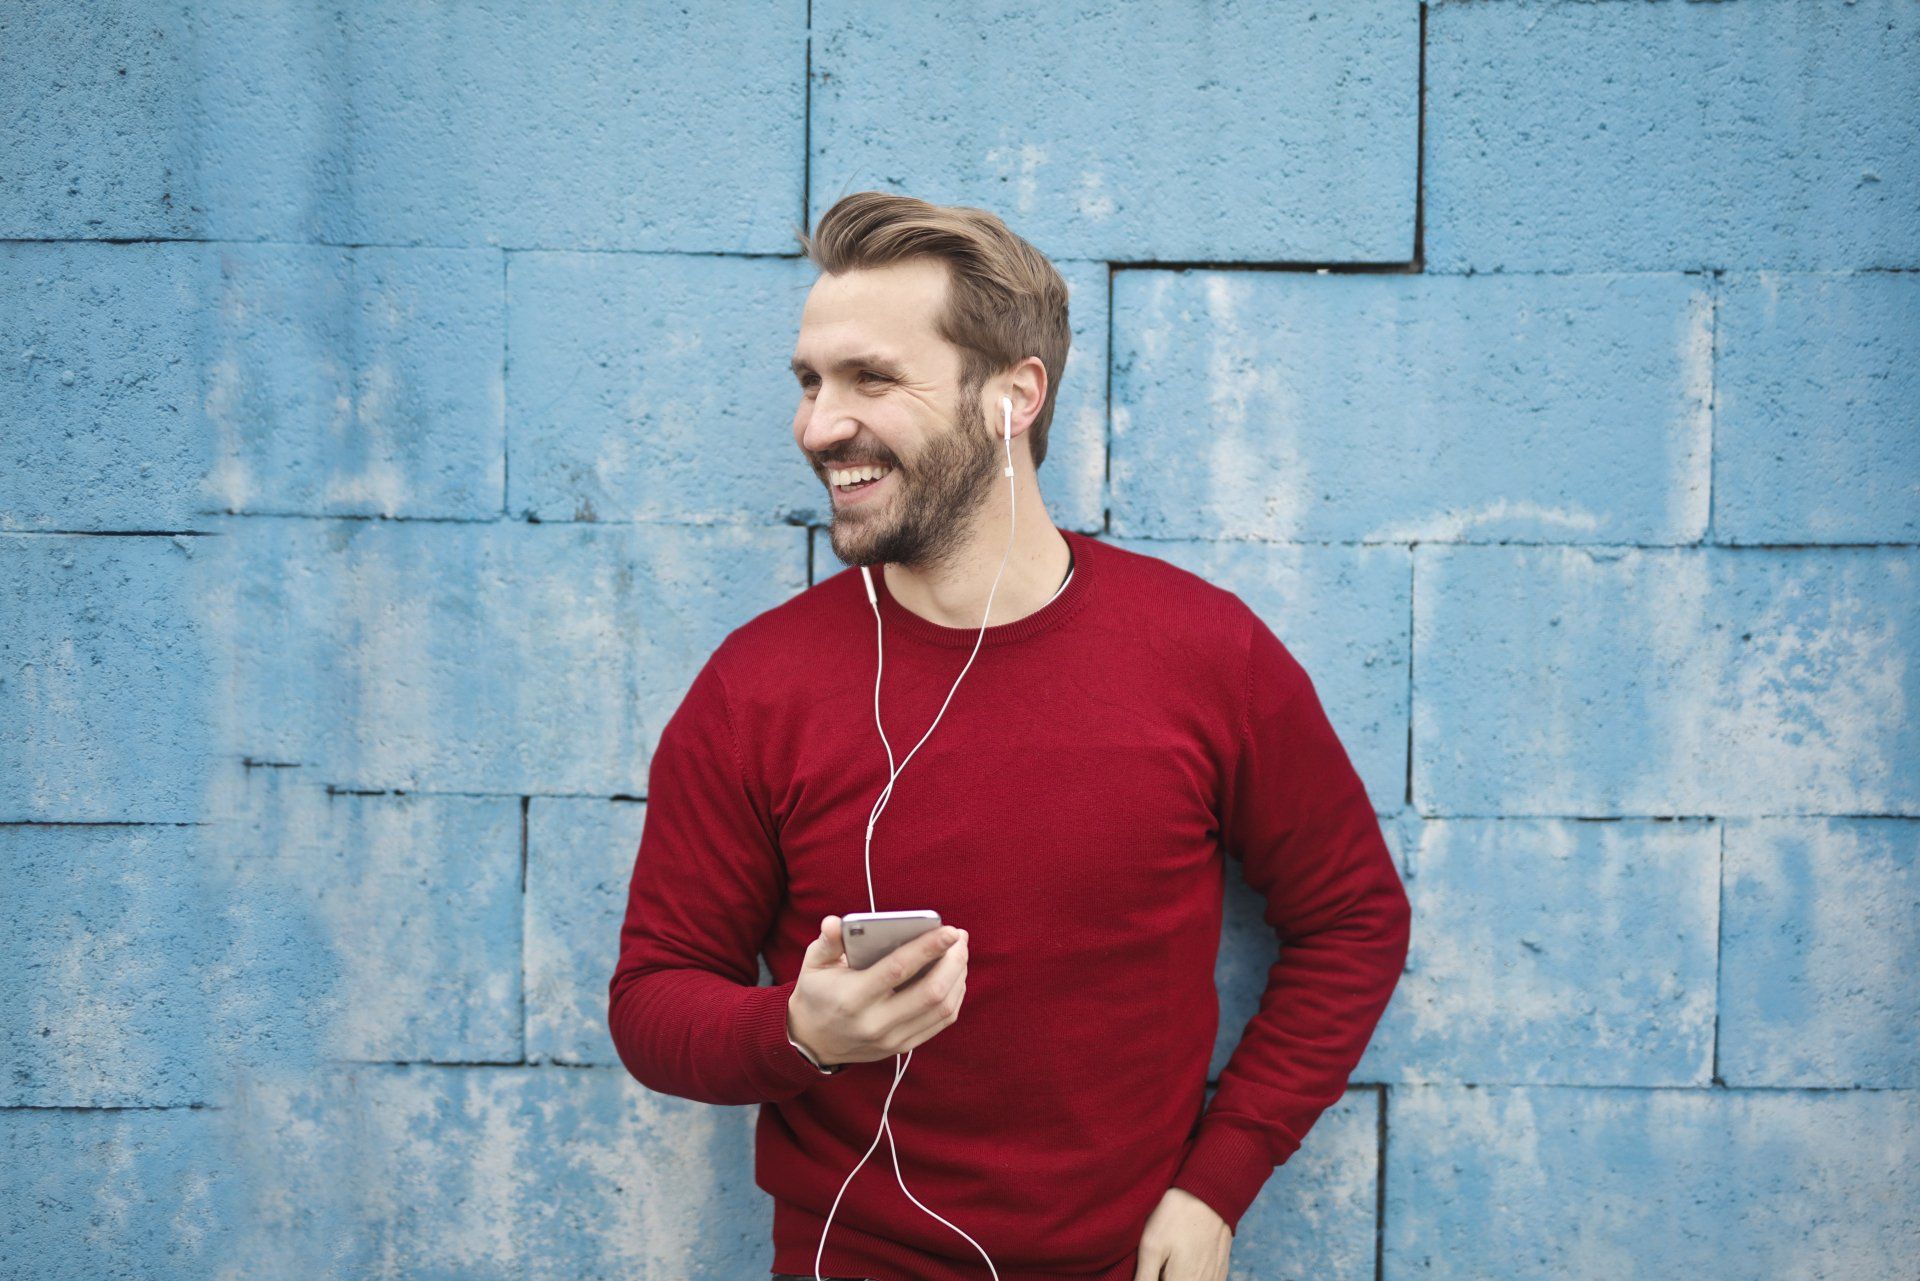 Man with headphones smiling | Dental Assistant Career Degree in GA